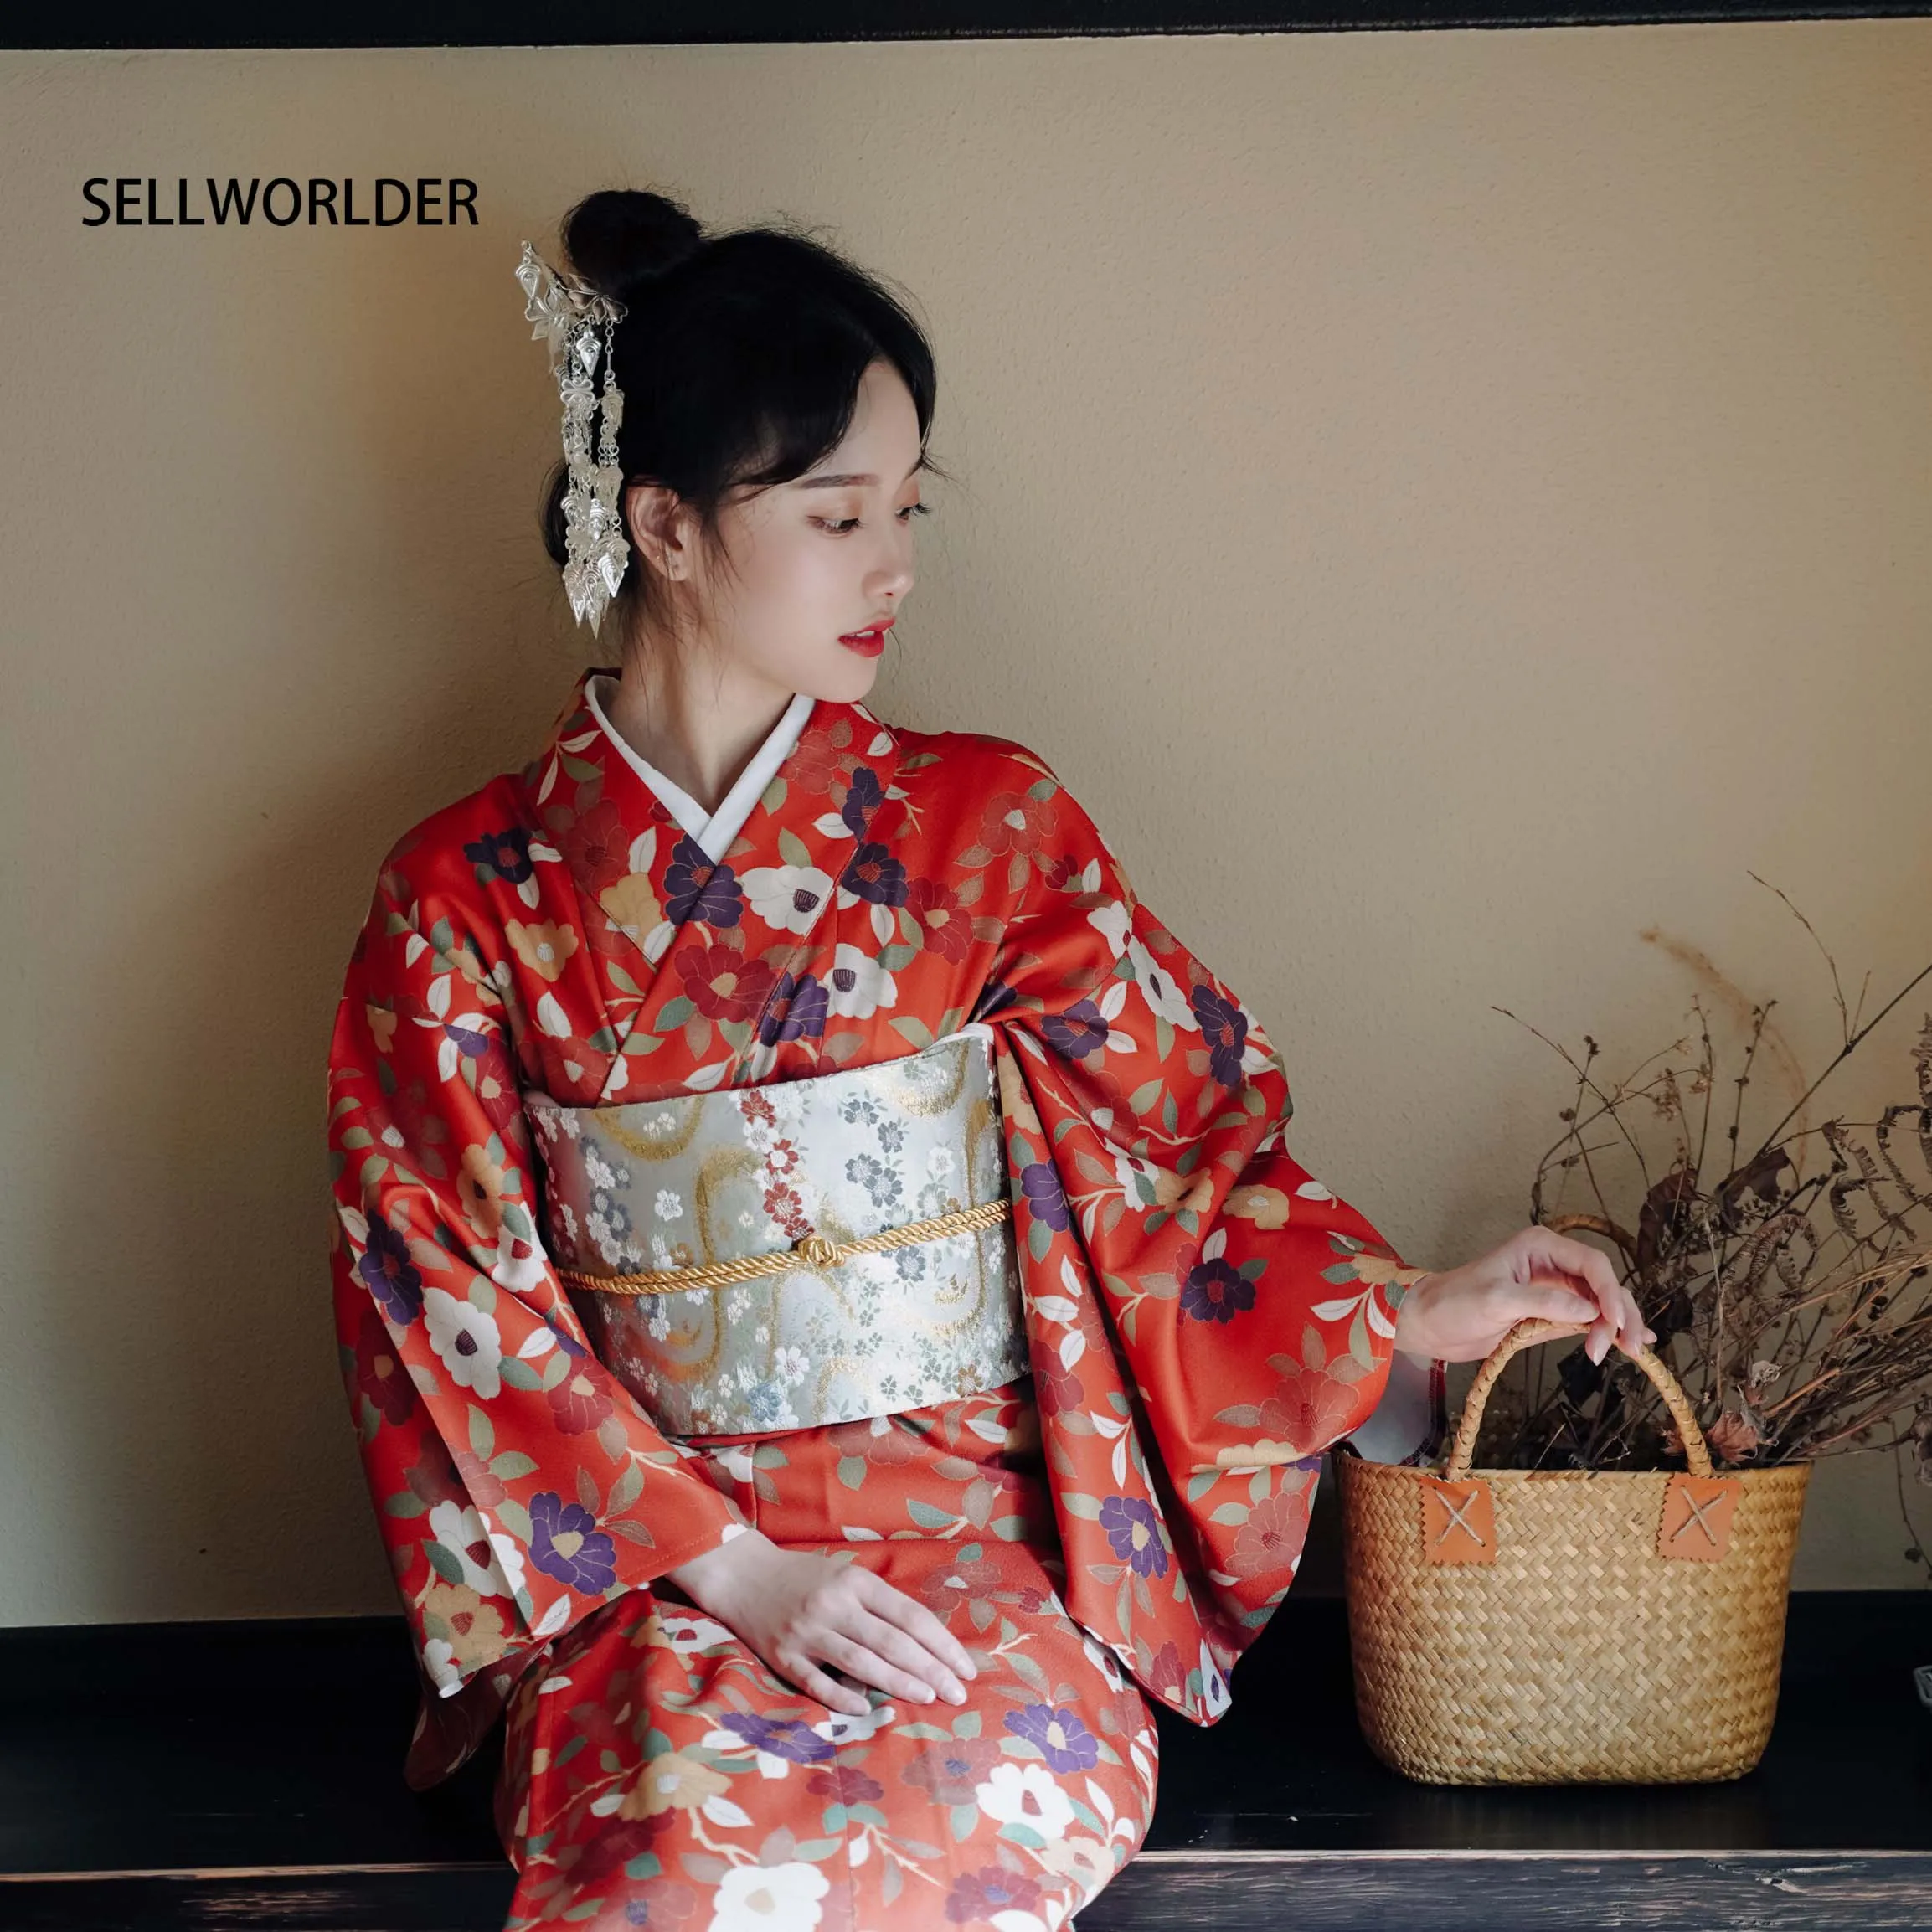 

2019 SELLWORLDER retro Japanese Kimono Style yukata Girl red dress Woman flower bloom print Long Dress with handbag